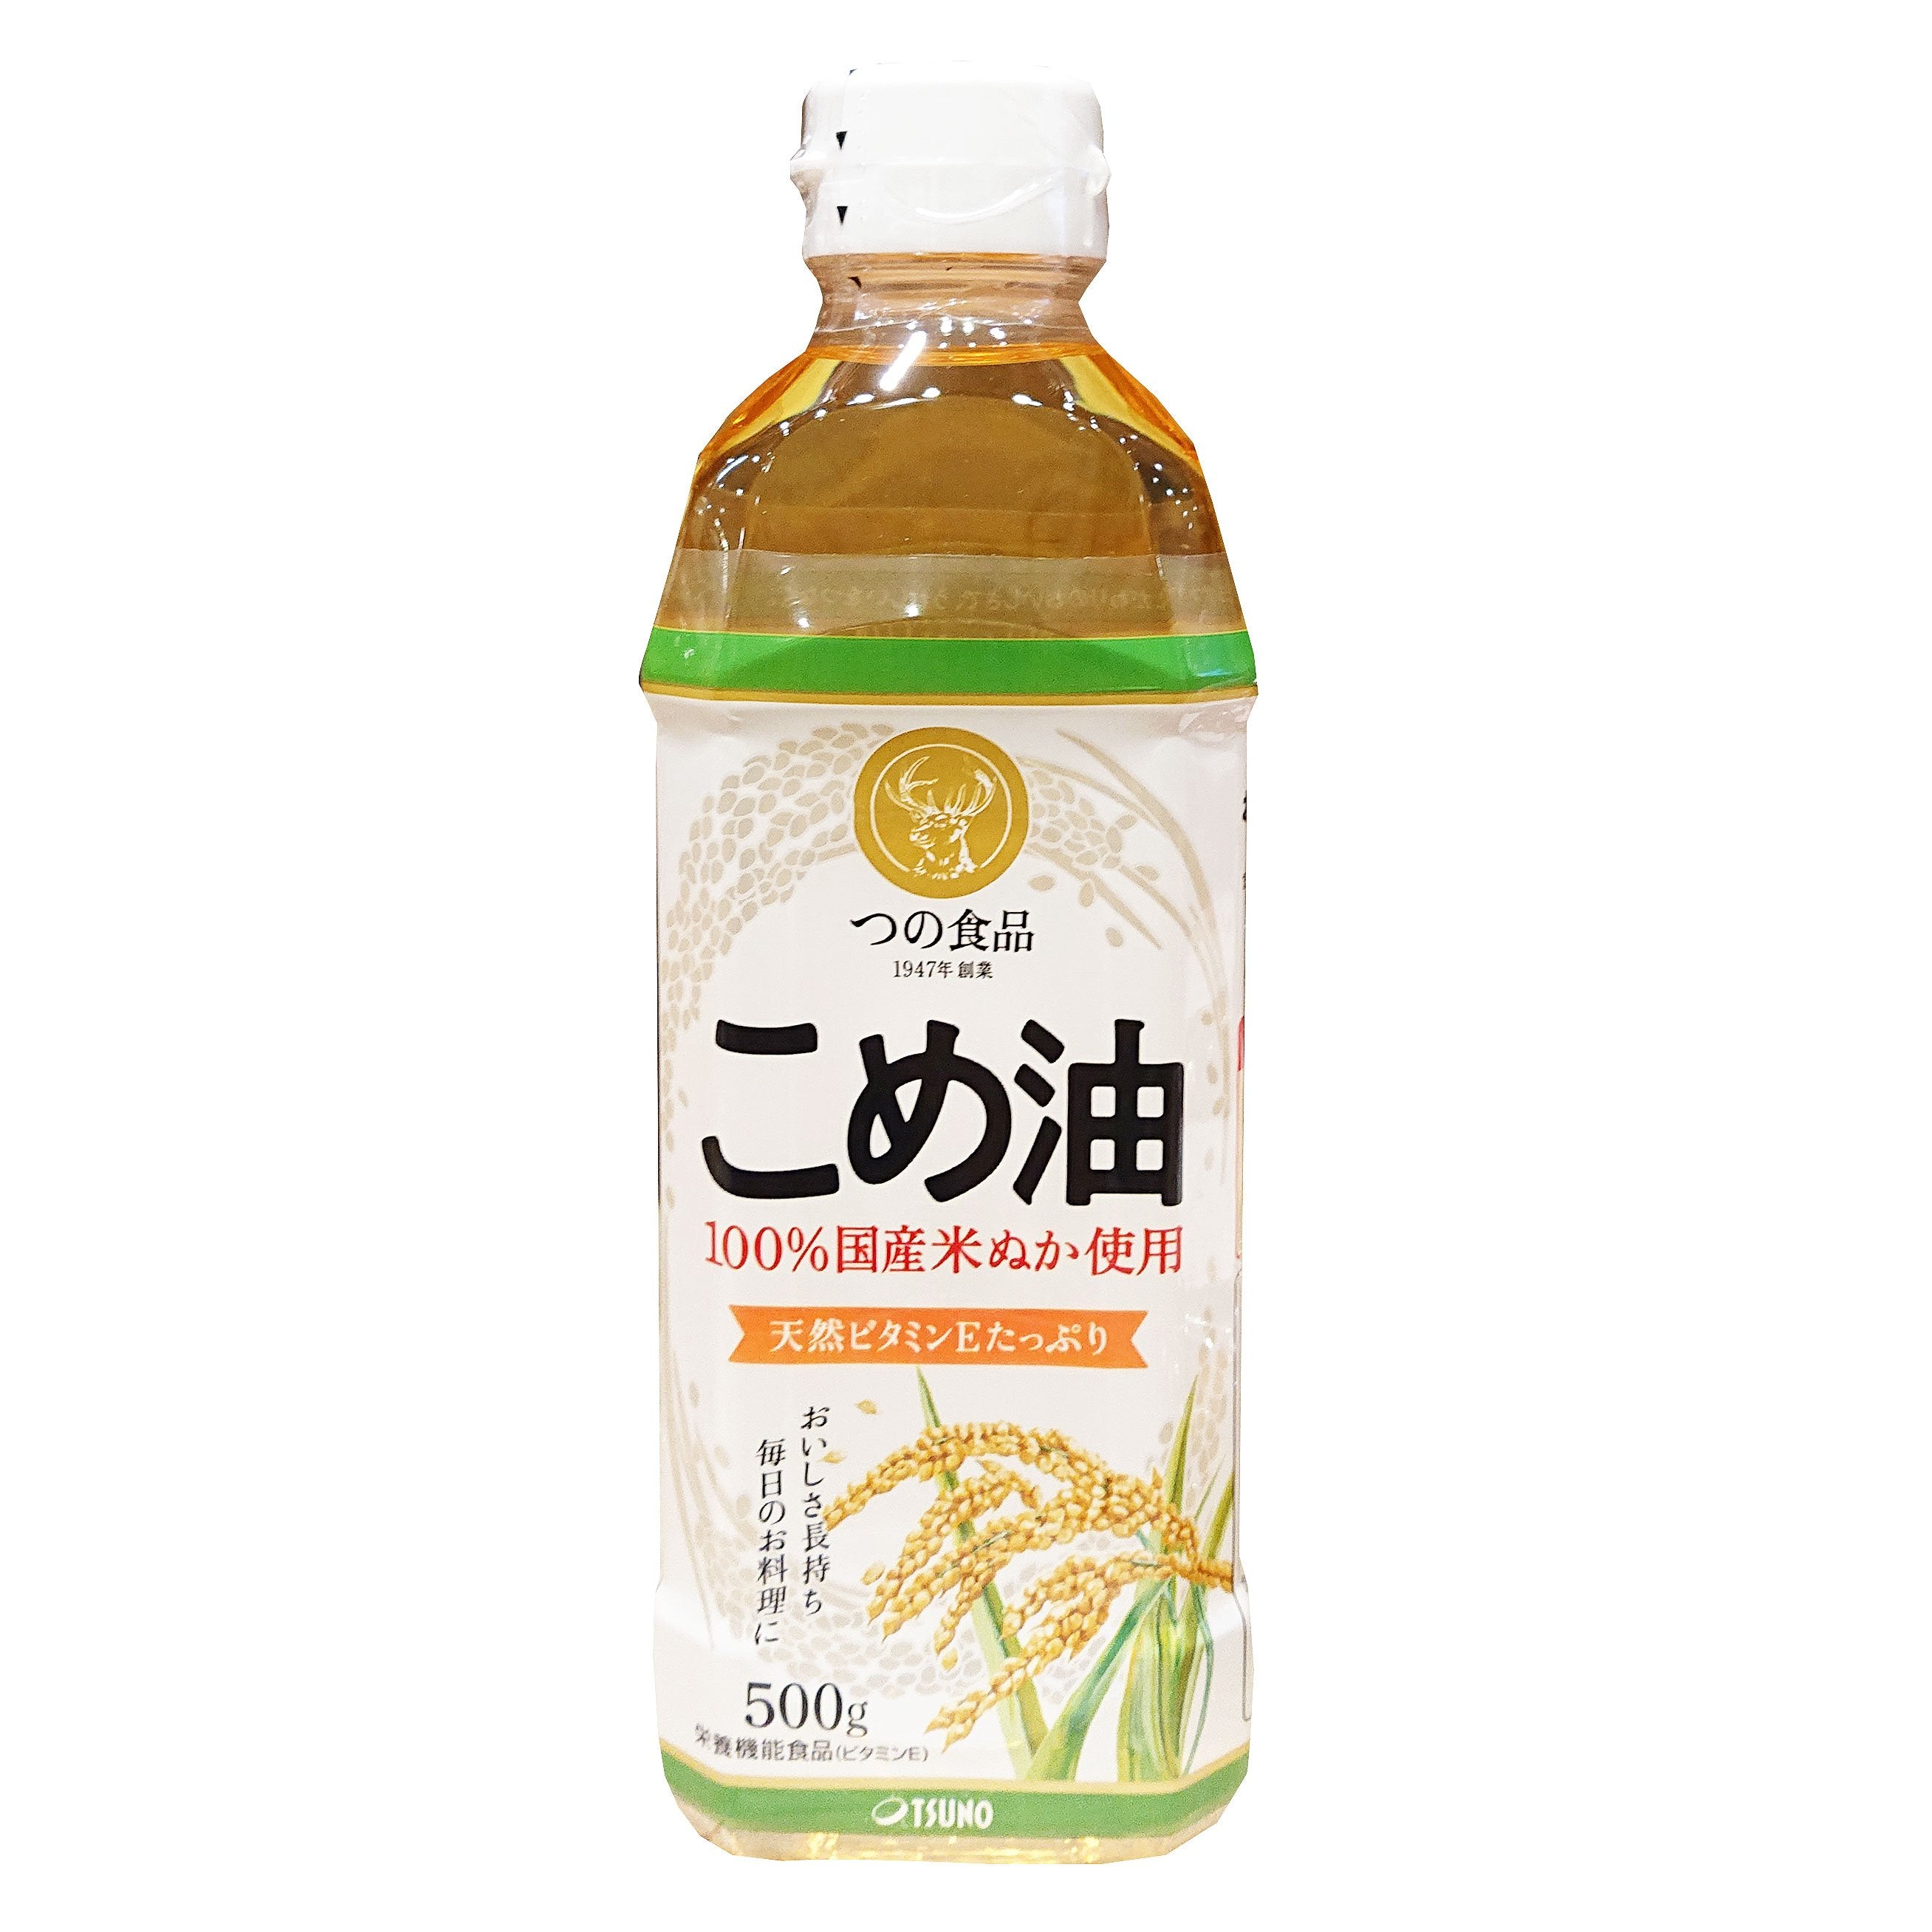 Tsuno-Pure-Japanese-Rice-Bran-Oil-Halal-Neutral-Cooking-Oil-1000g-1-2024-05-21T03:07:44.196Z.jpg